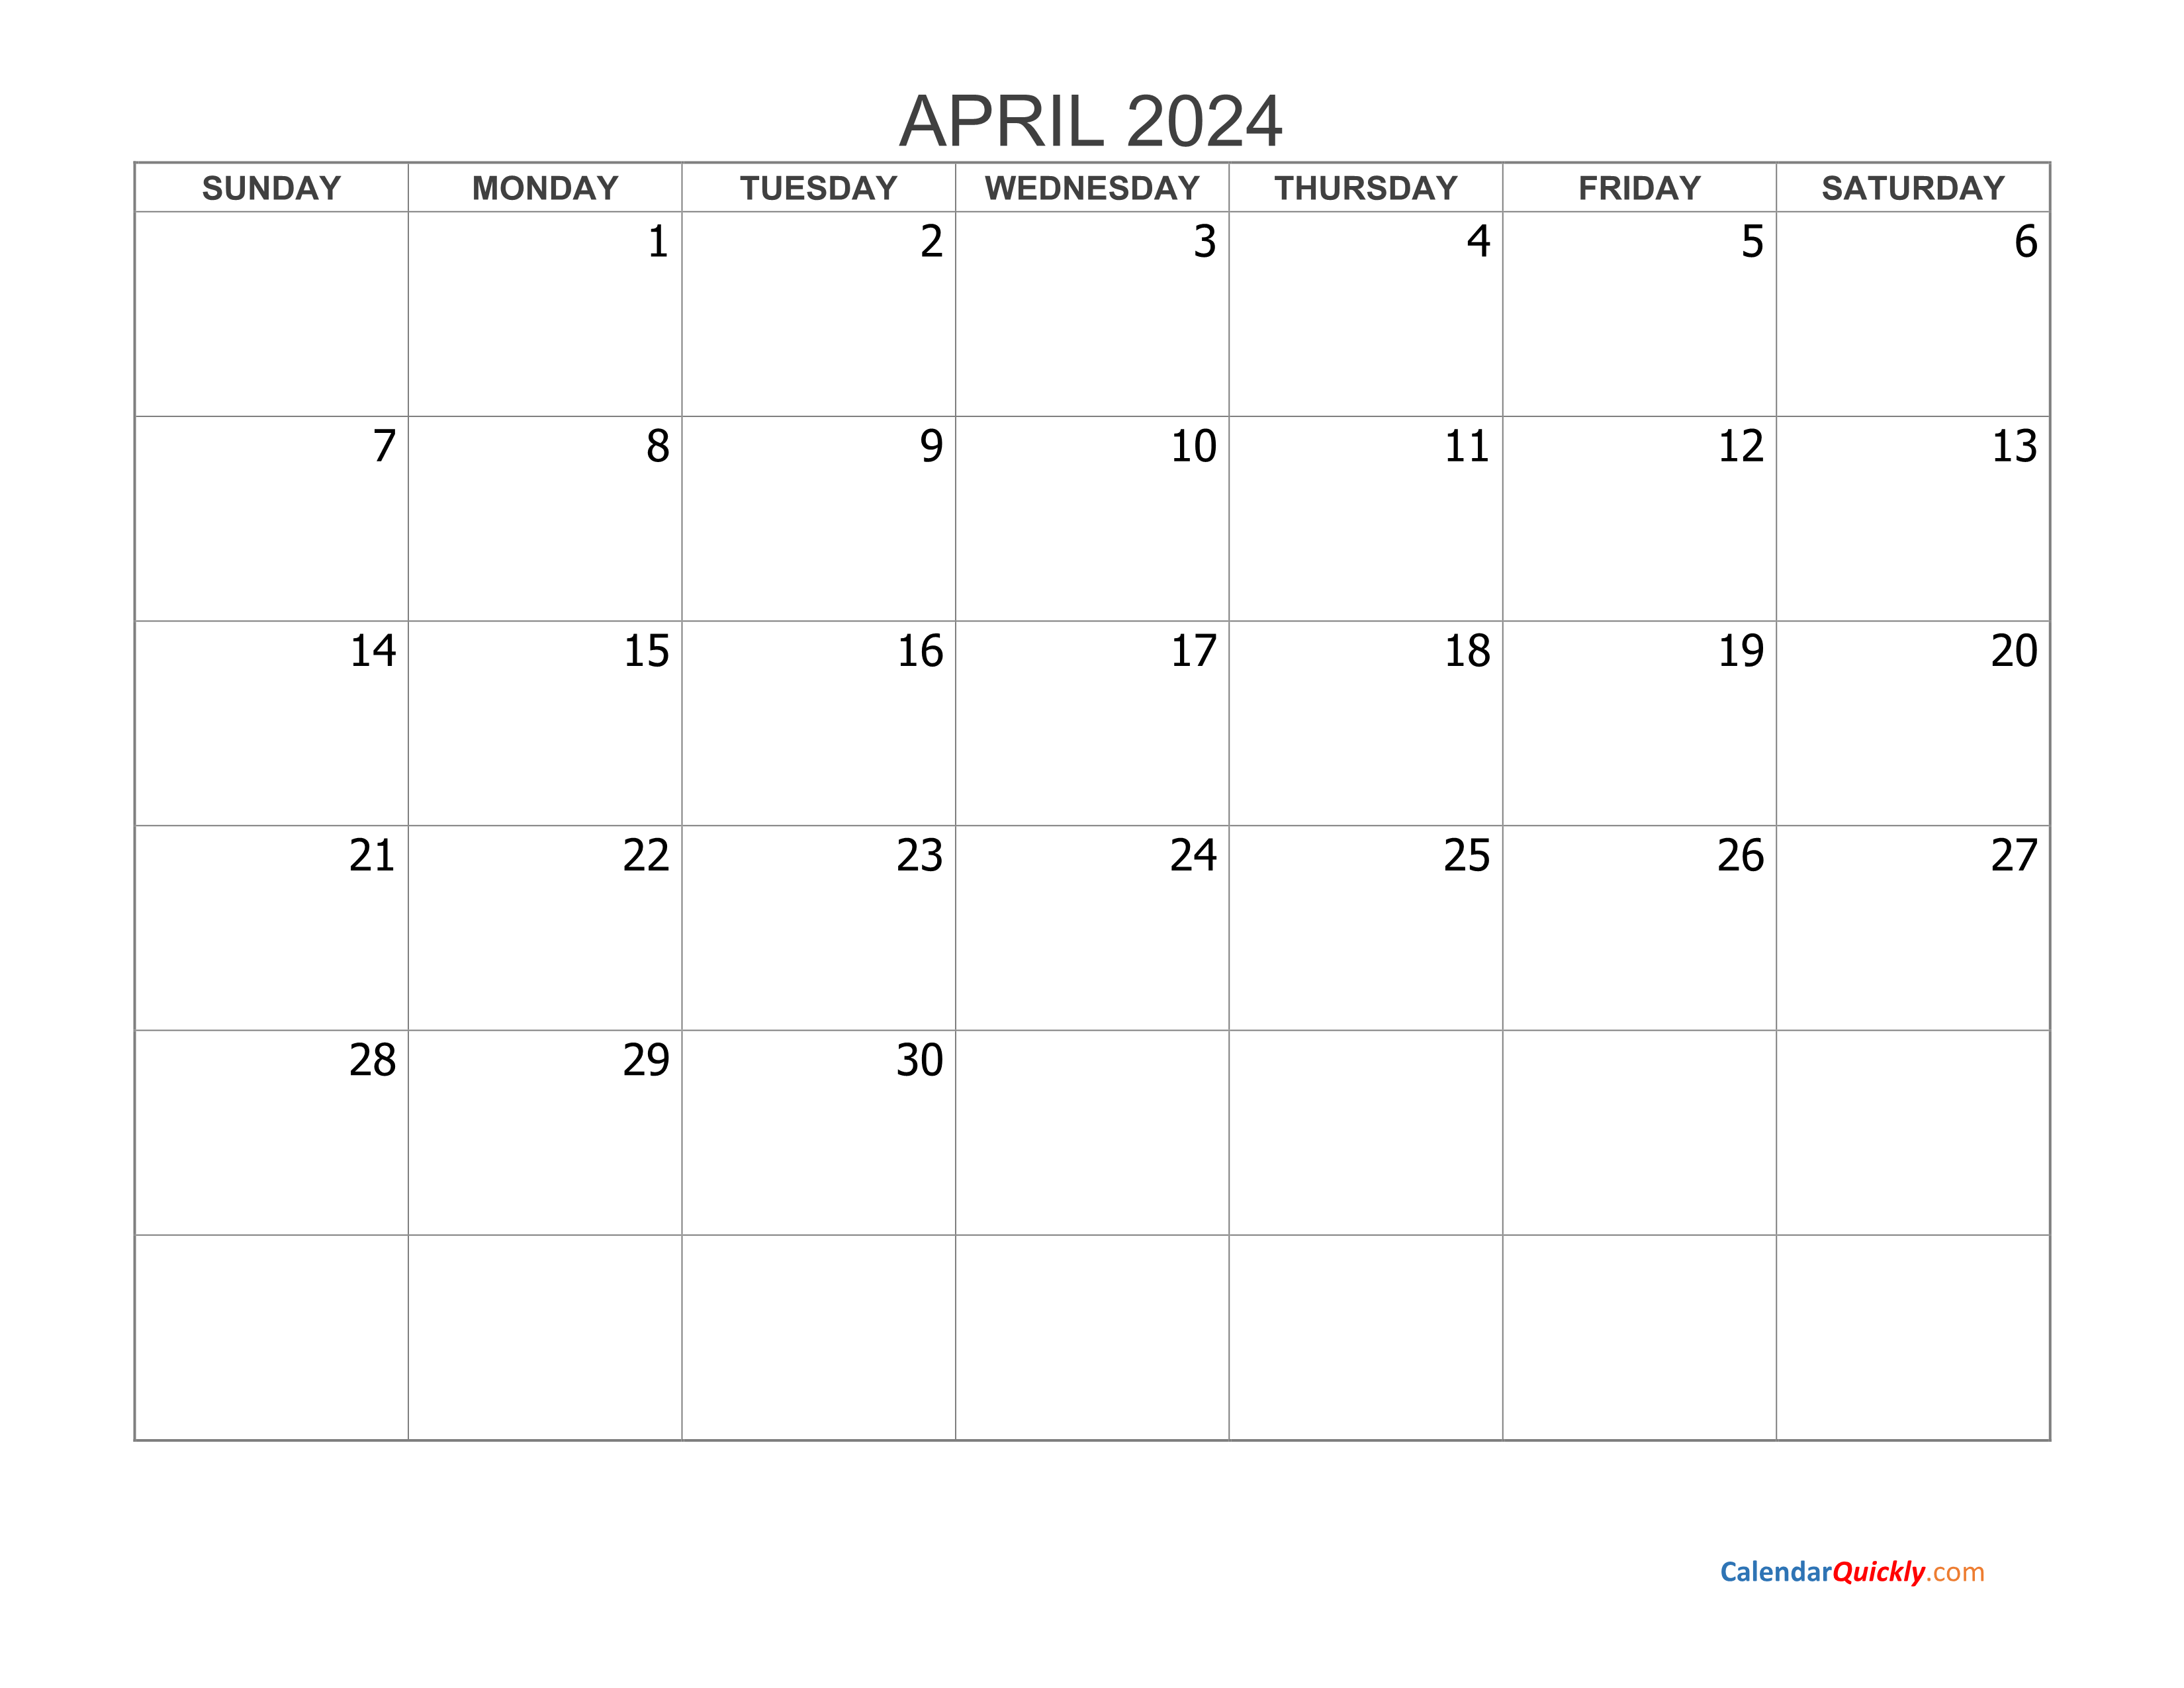 April 2024 Blank Calendar | Calendar Quickly